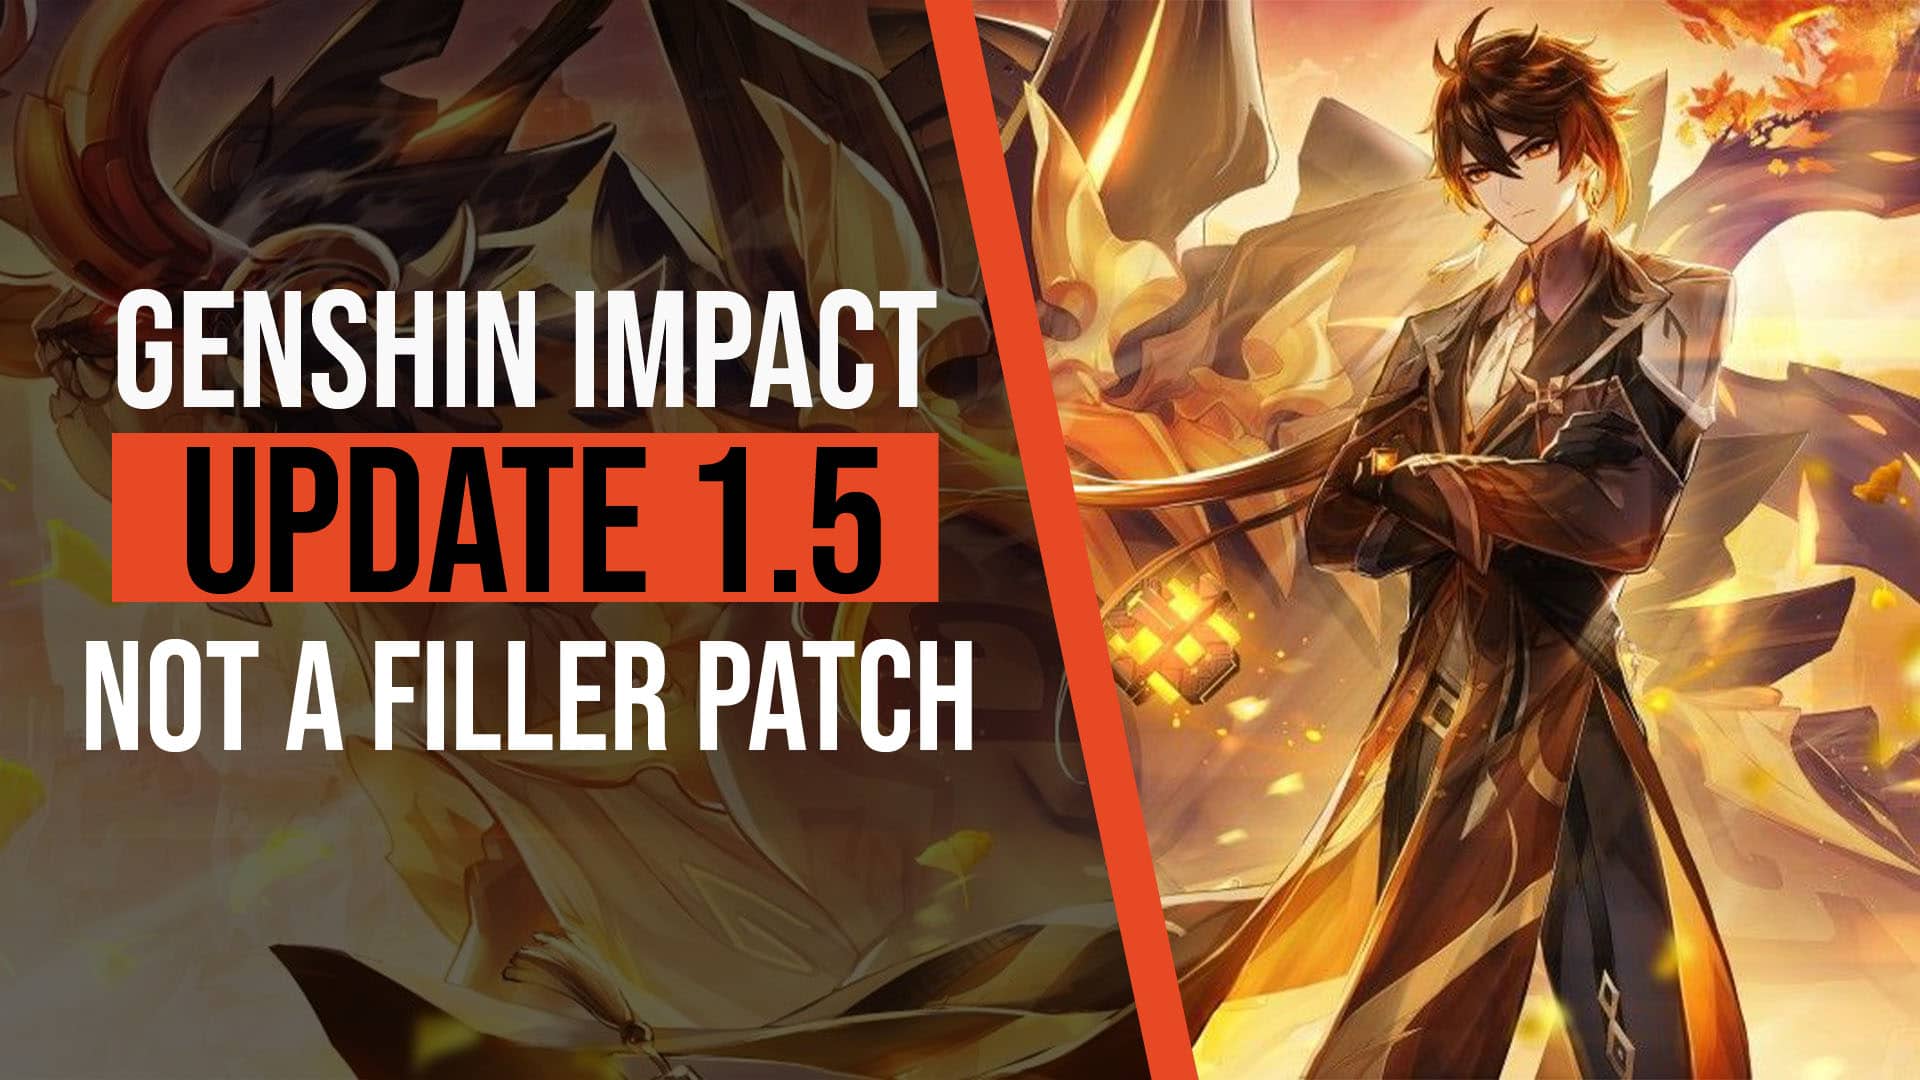 Genshin Impact Update 1.5 is Not a Filler Patch